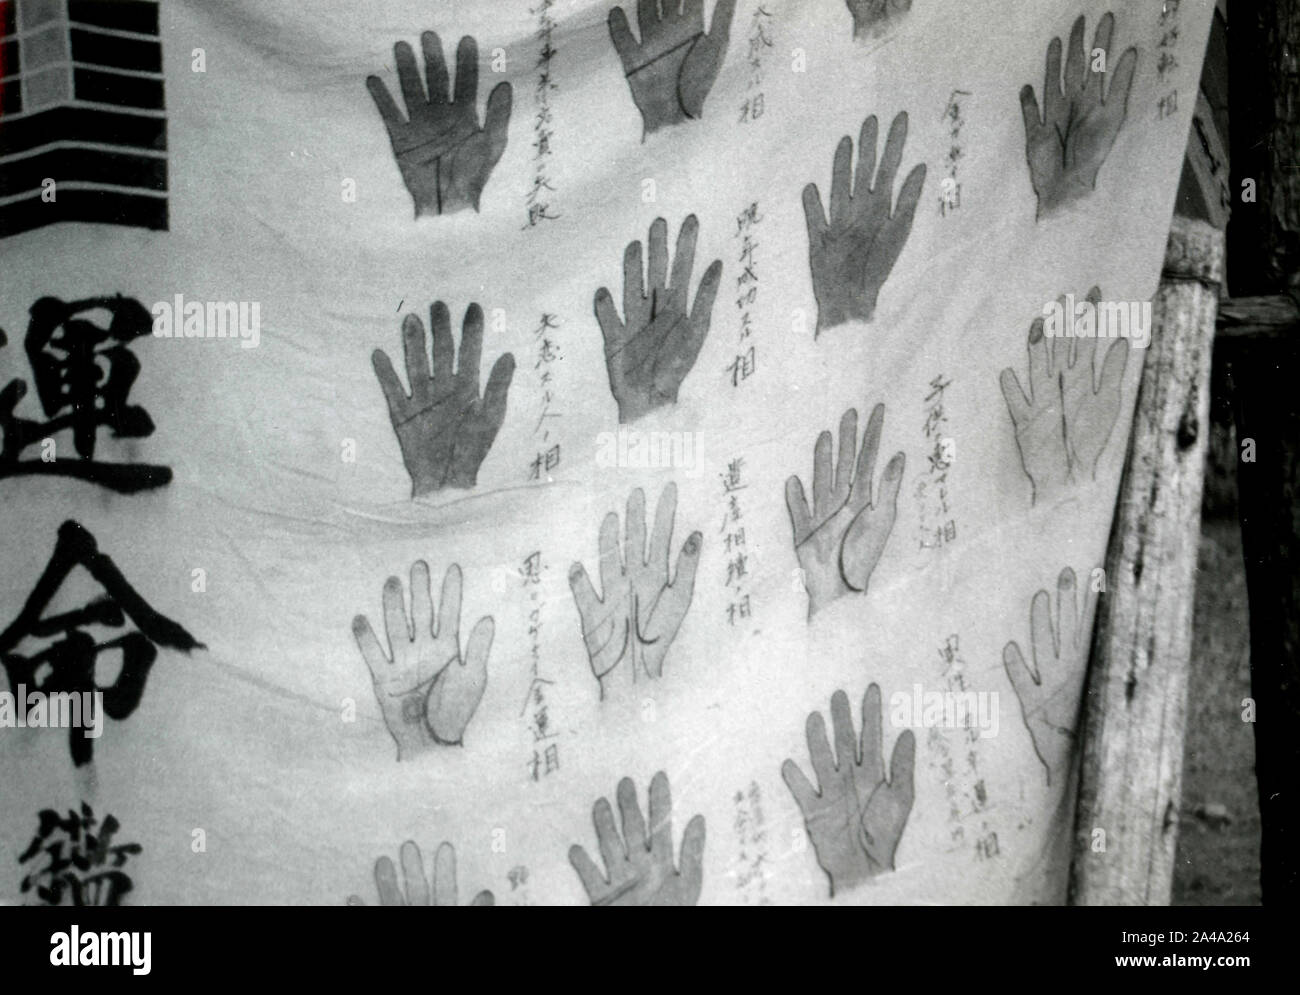 Japanese hand writings on fabric, Japan 1958 Stock Photo